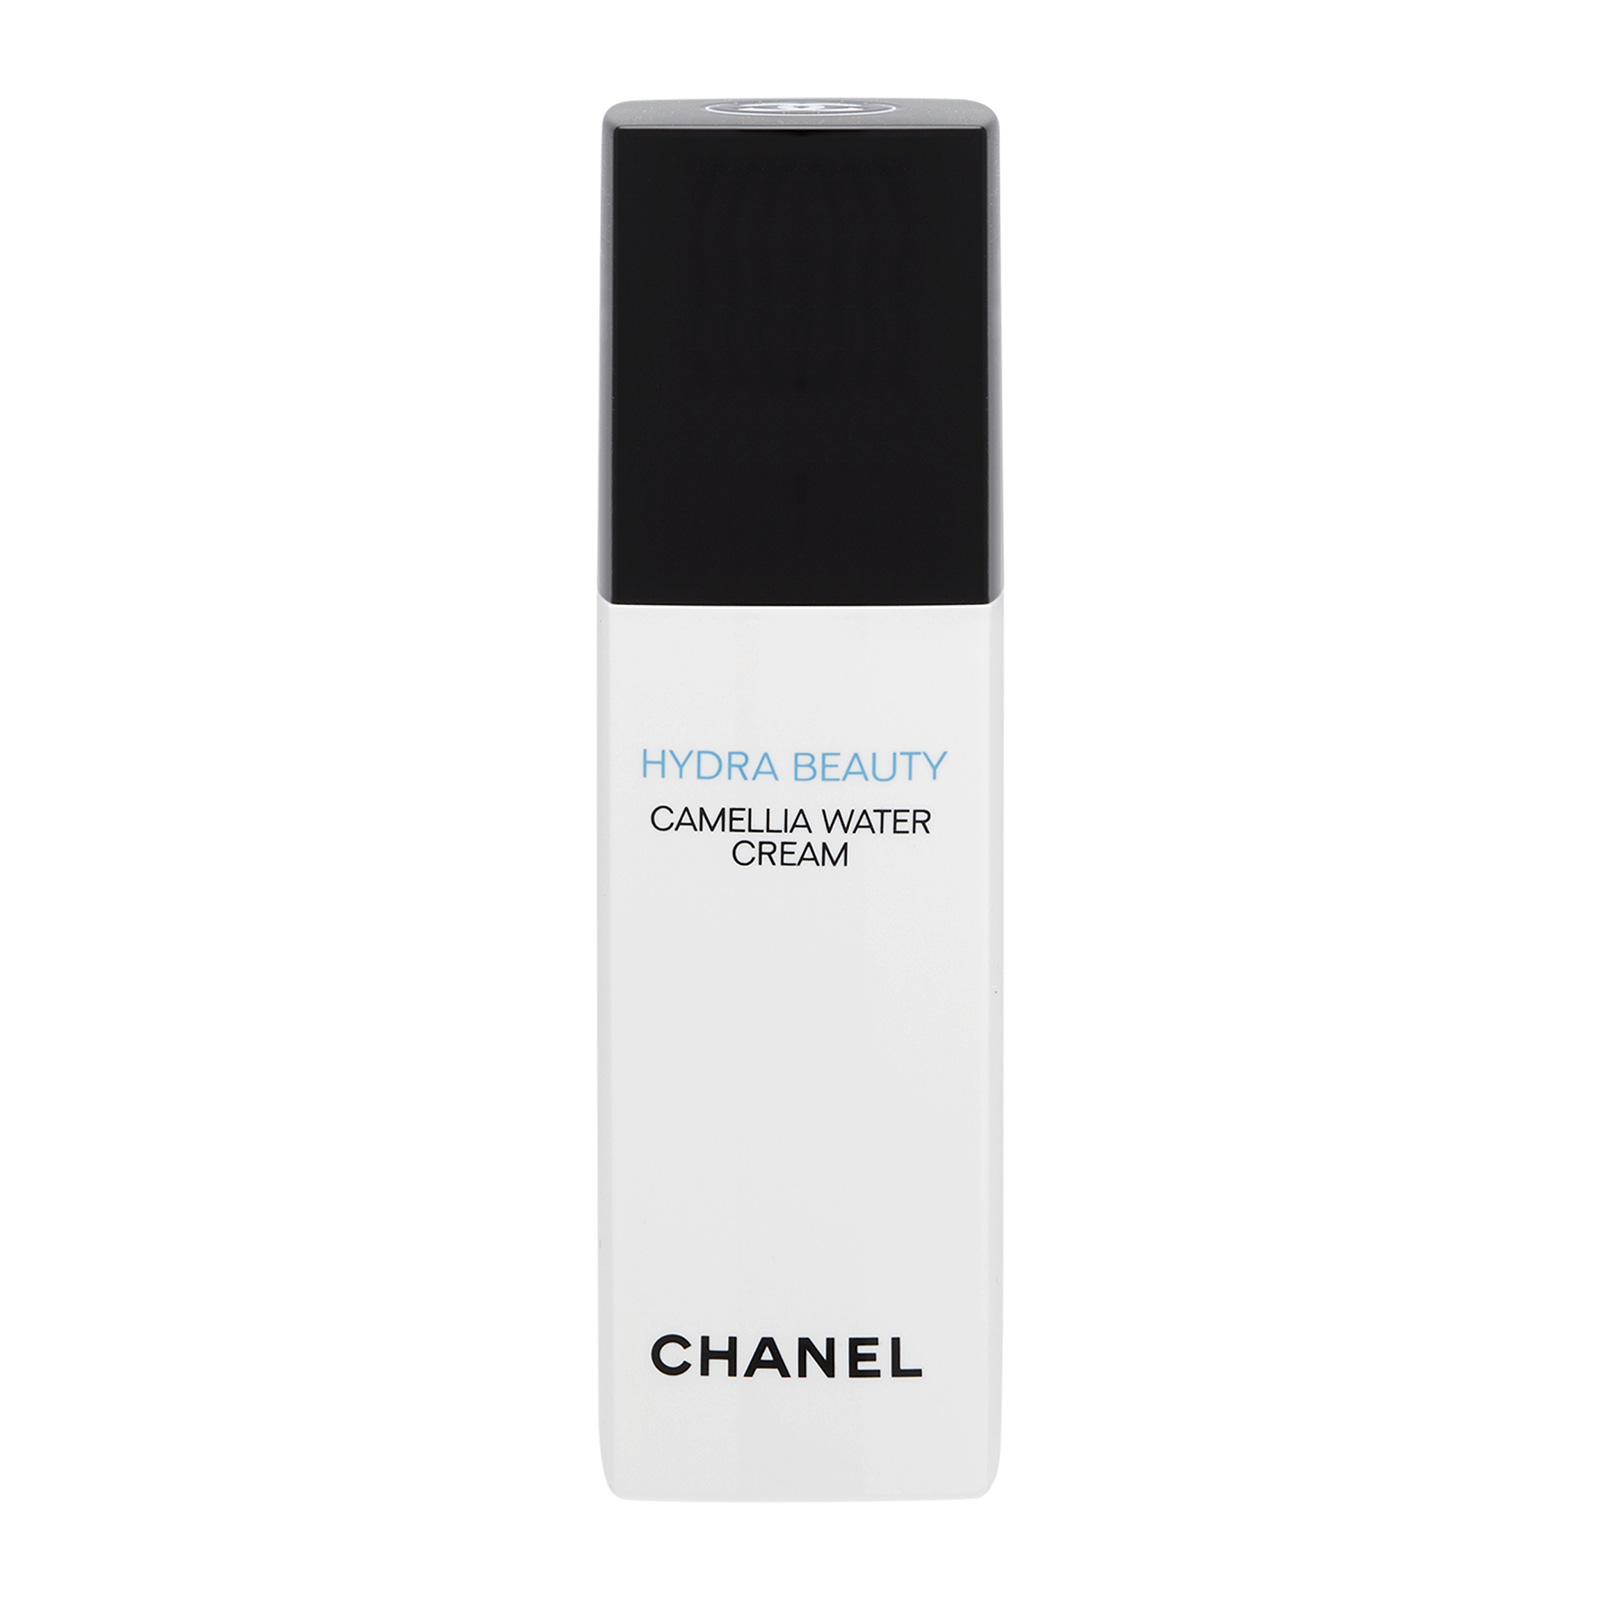 Chanel Hydra Beauty Camellia Water Cream30 ml 1 oz kalista Beauty